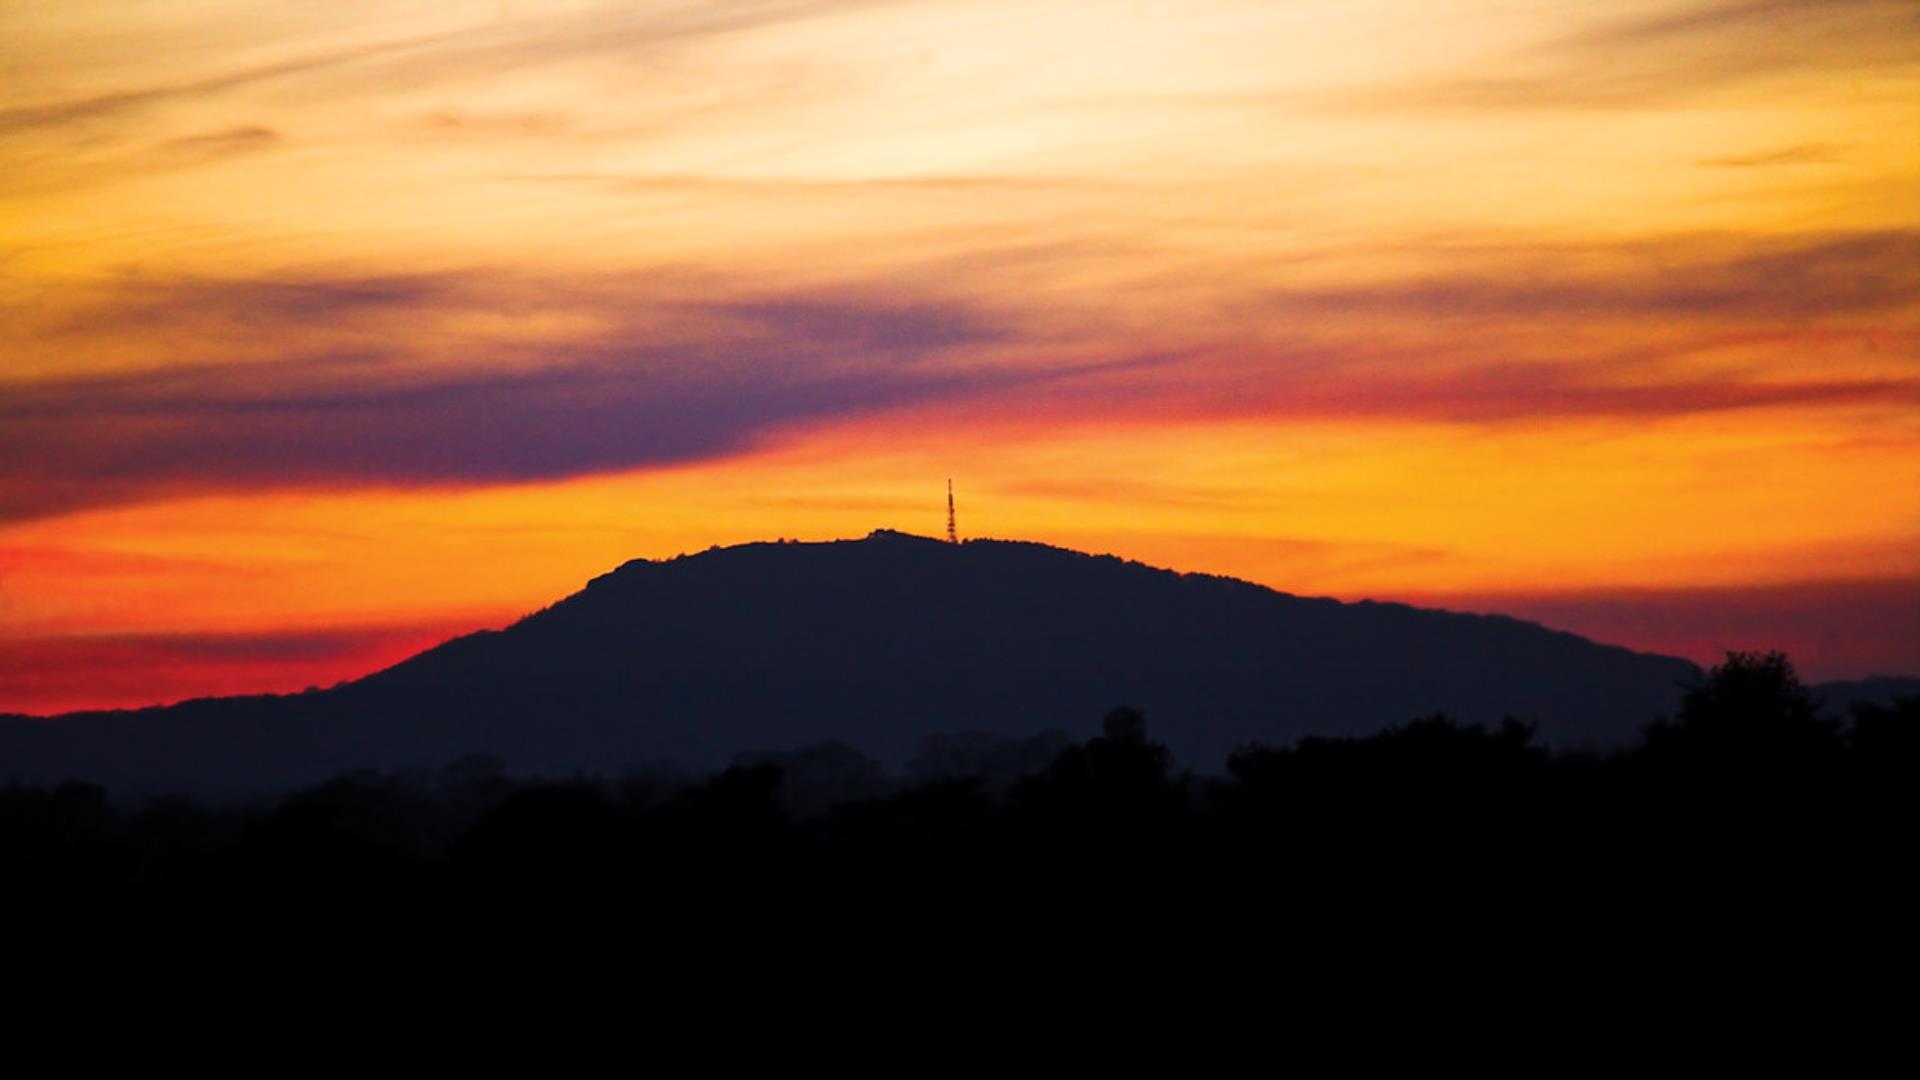 View of The Wrekin at sunset